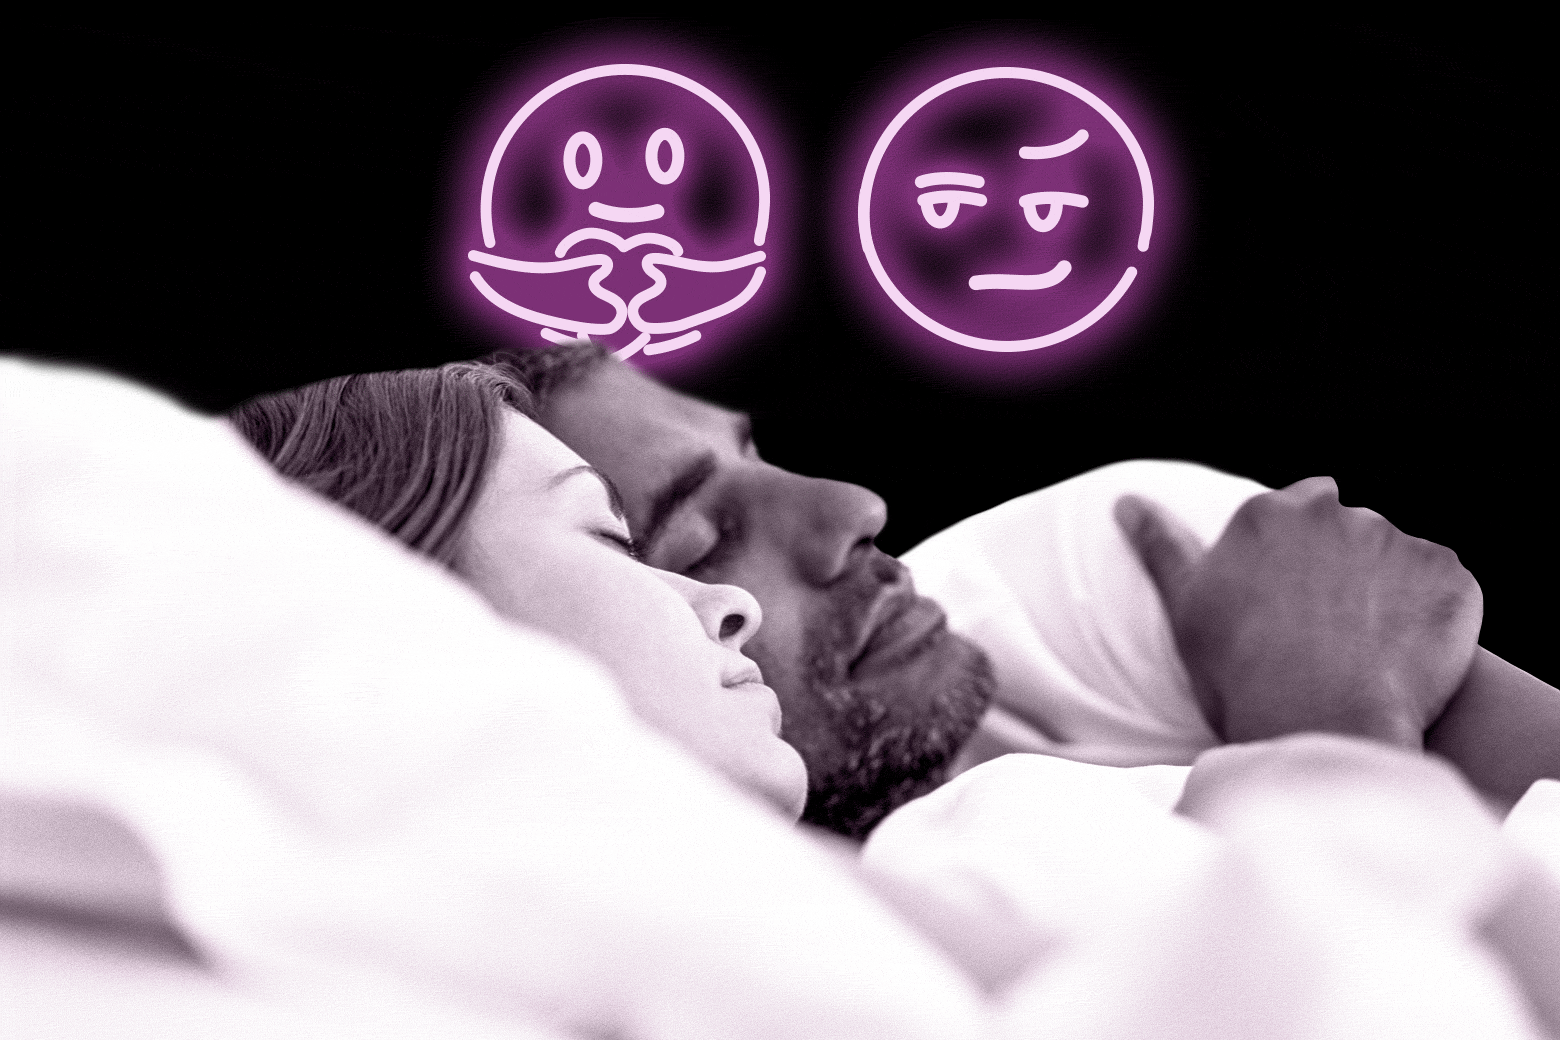 assume im always thinking about gay old men — some among us emojis